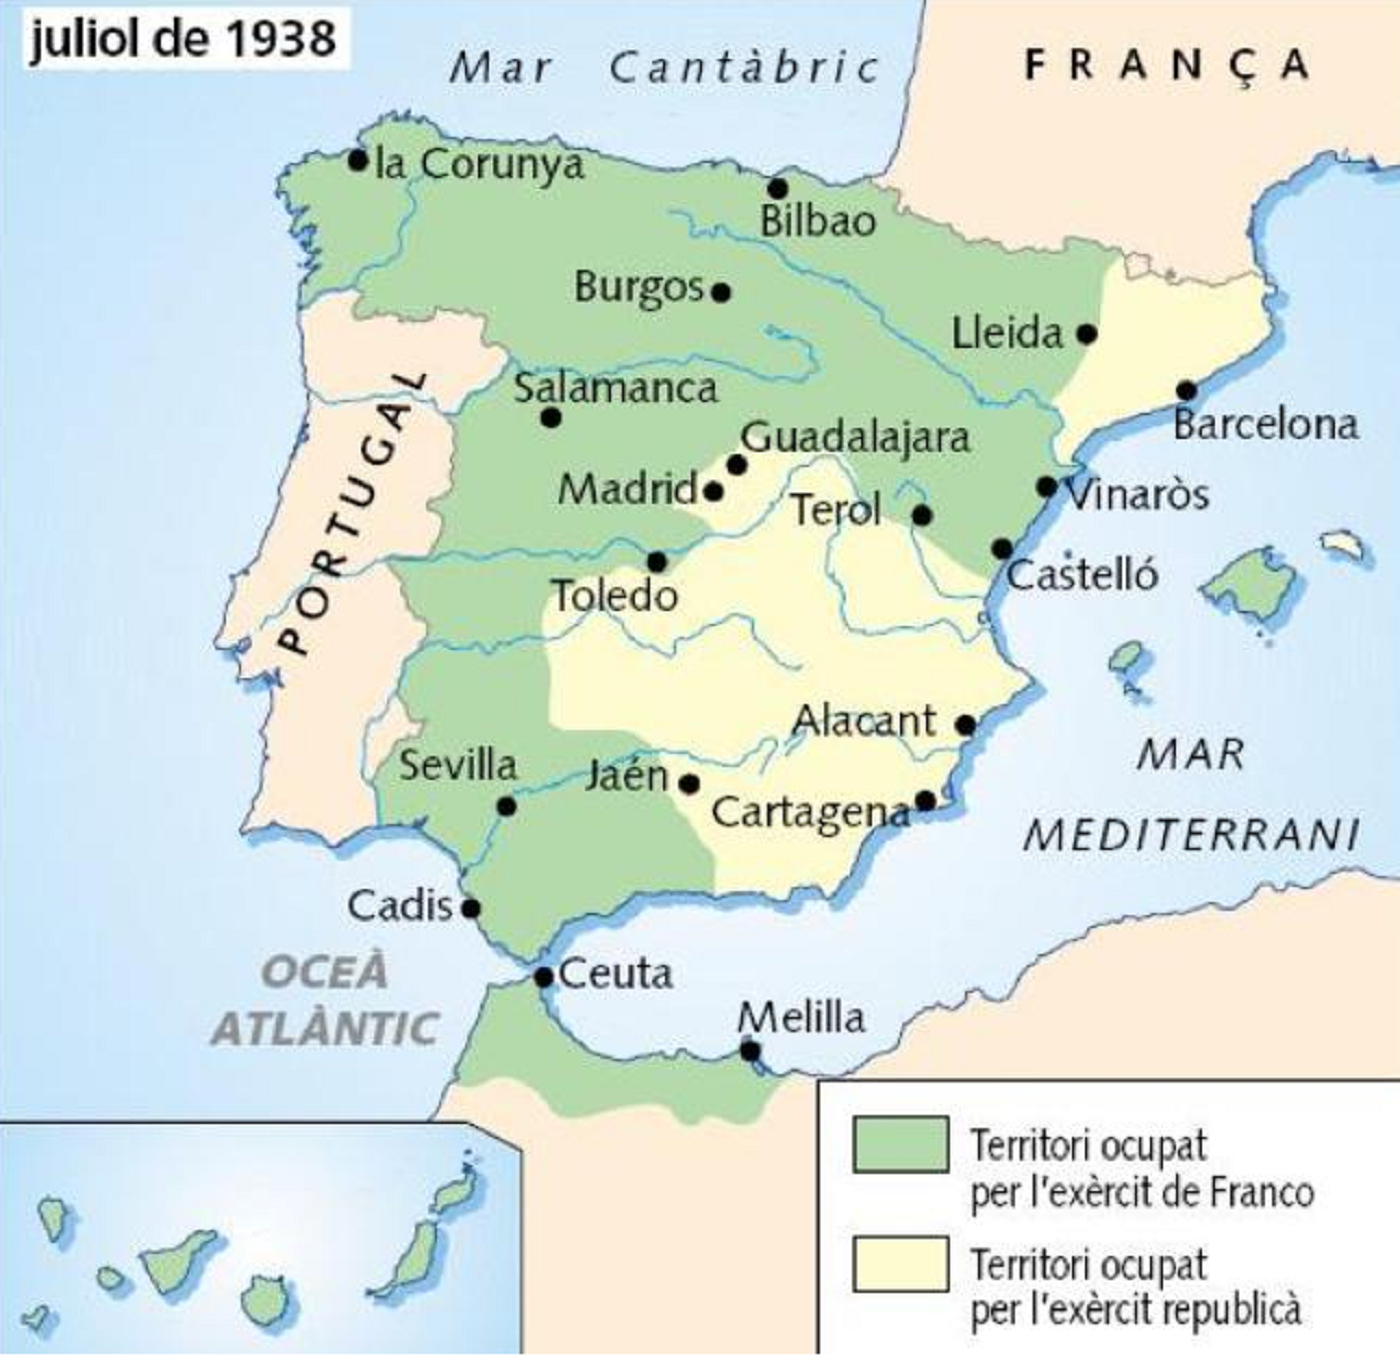 El ejército franquista aísla Catalunya del resto de la zona republicana